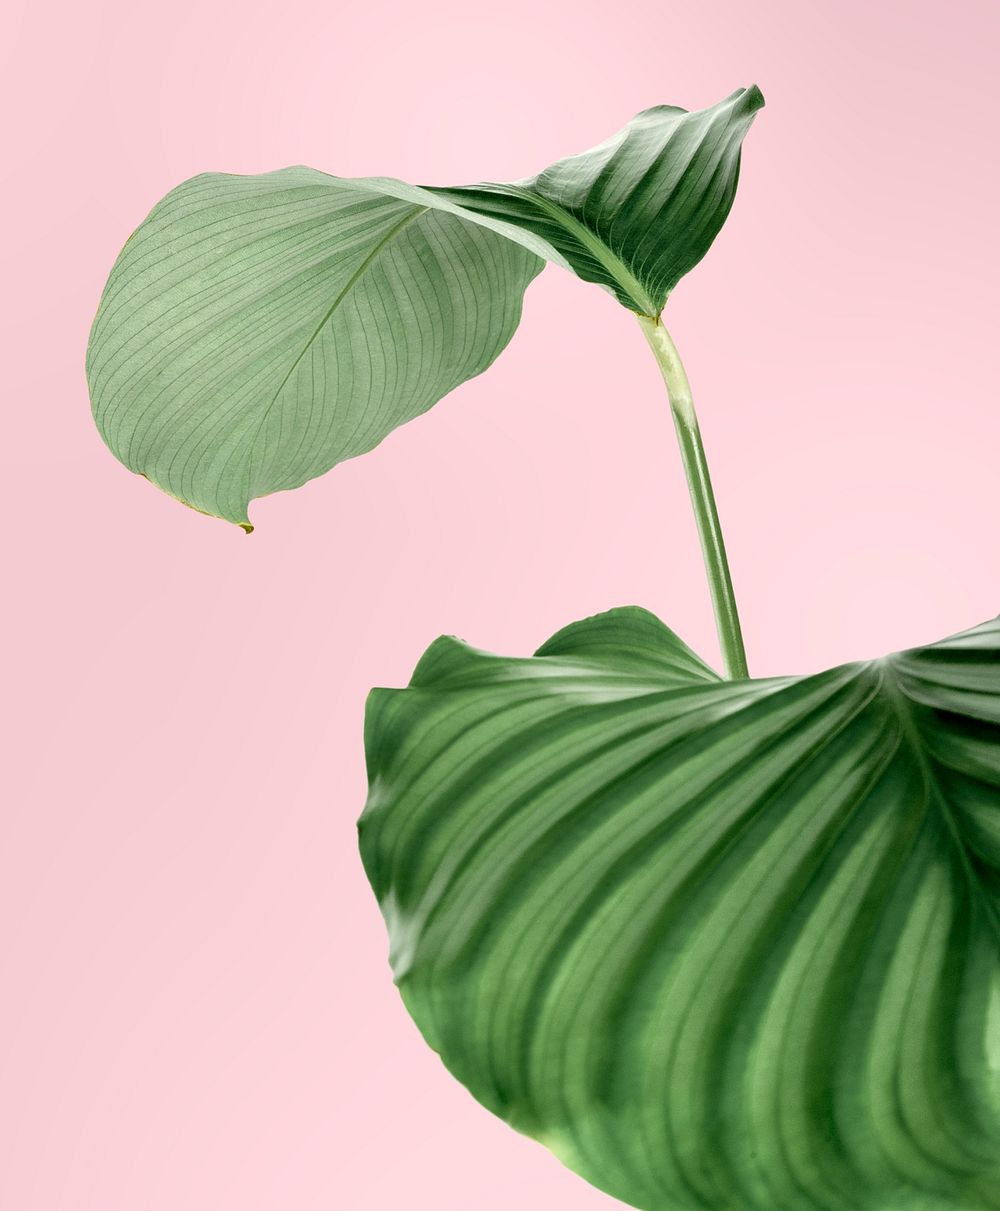 Calathea Orbifolia leaves on a pink background